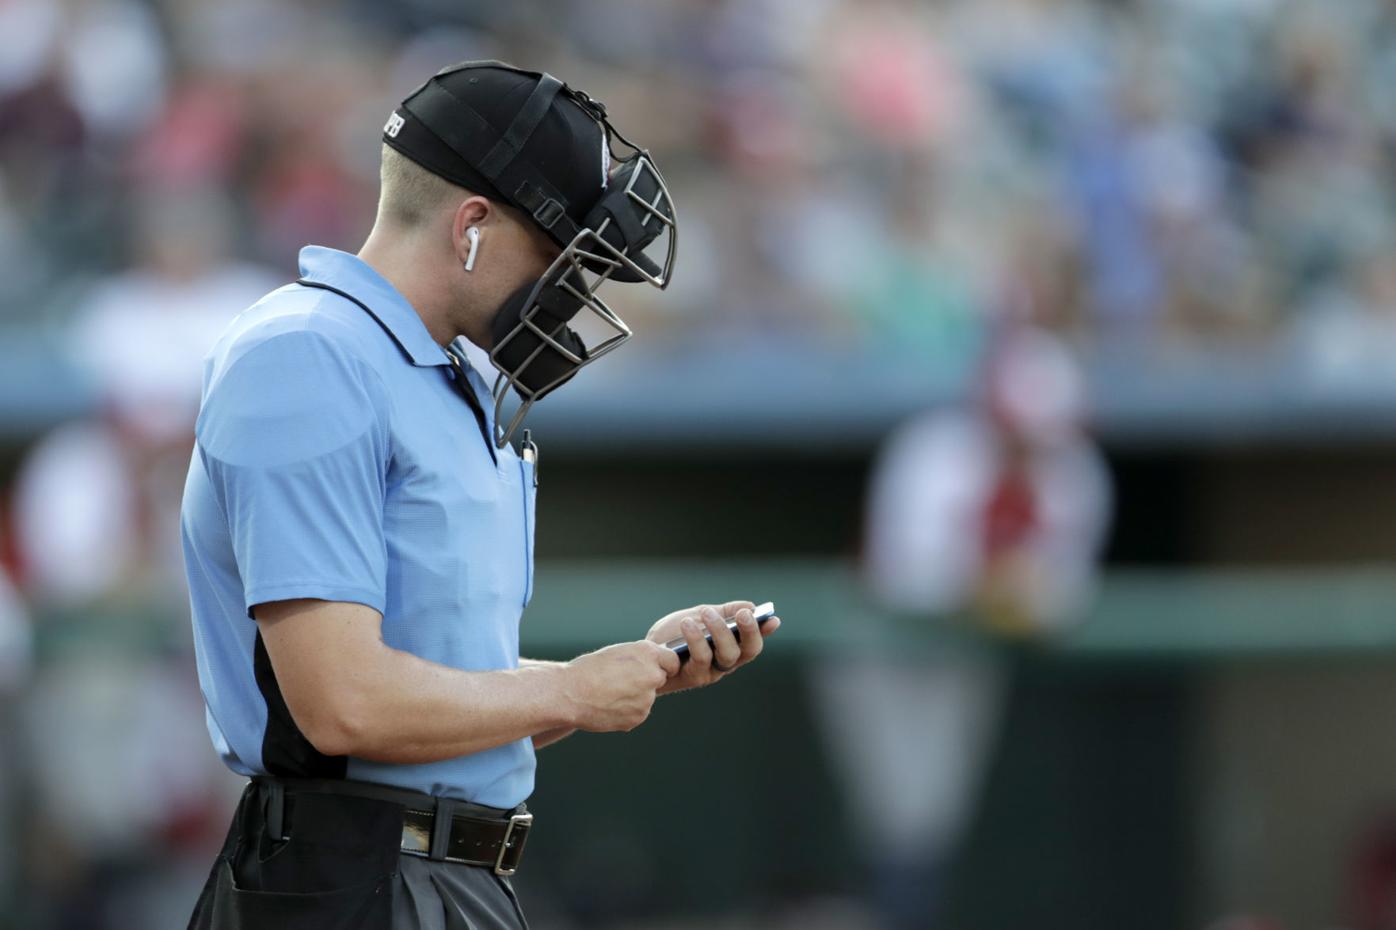 What Umpire Gear & Apparel Minor League Baseball Umpires Wear